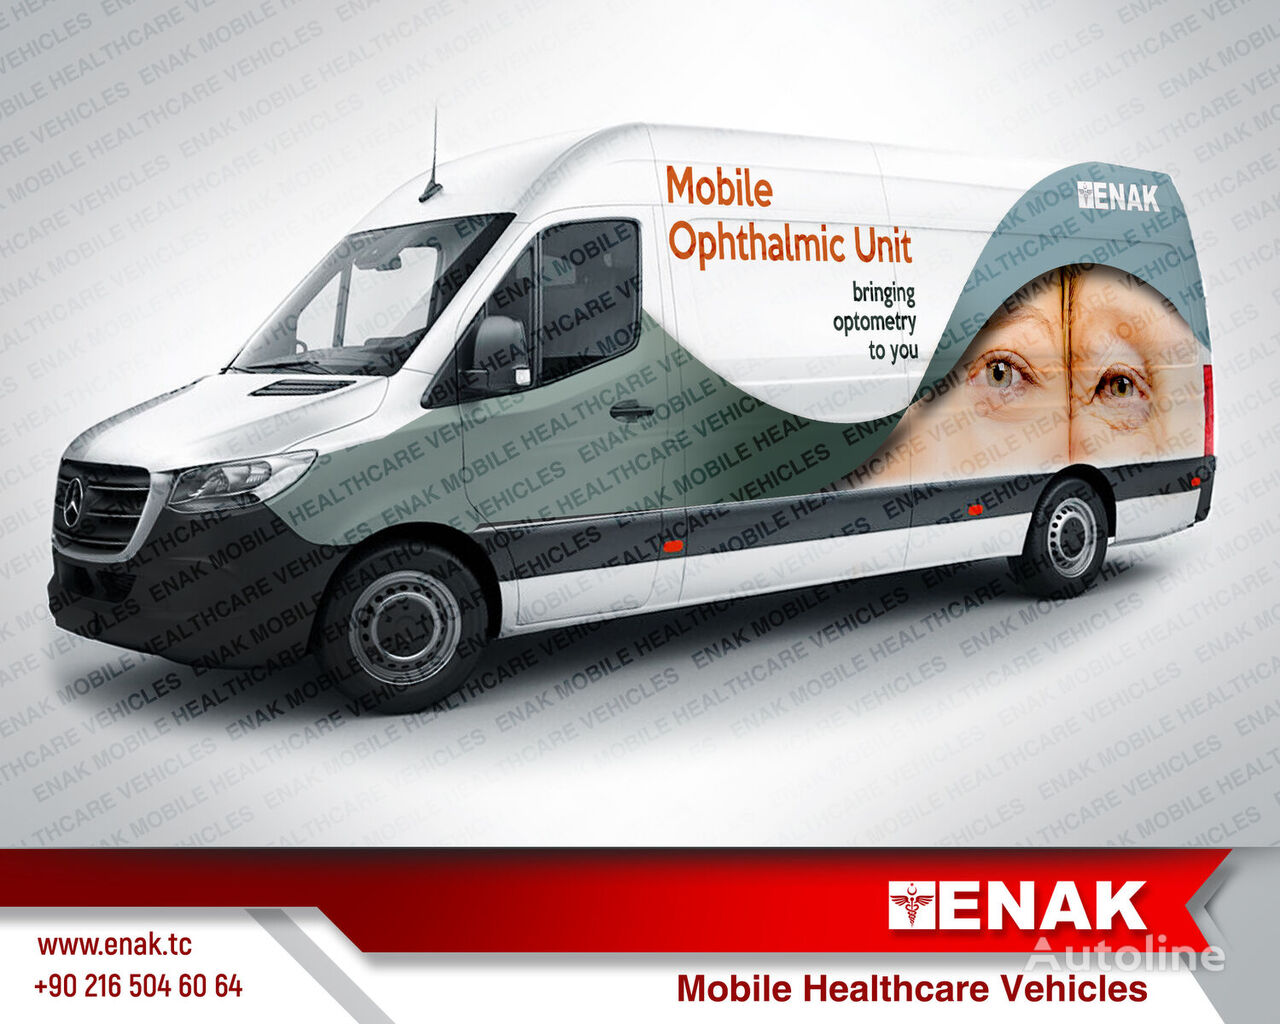 MERCEDES-BENZ Mobile Ophthalmic Vehicle ambulancia nueva